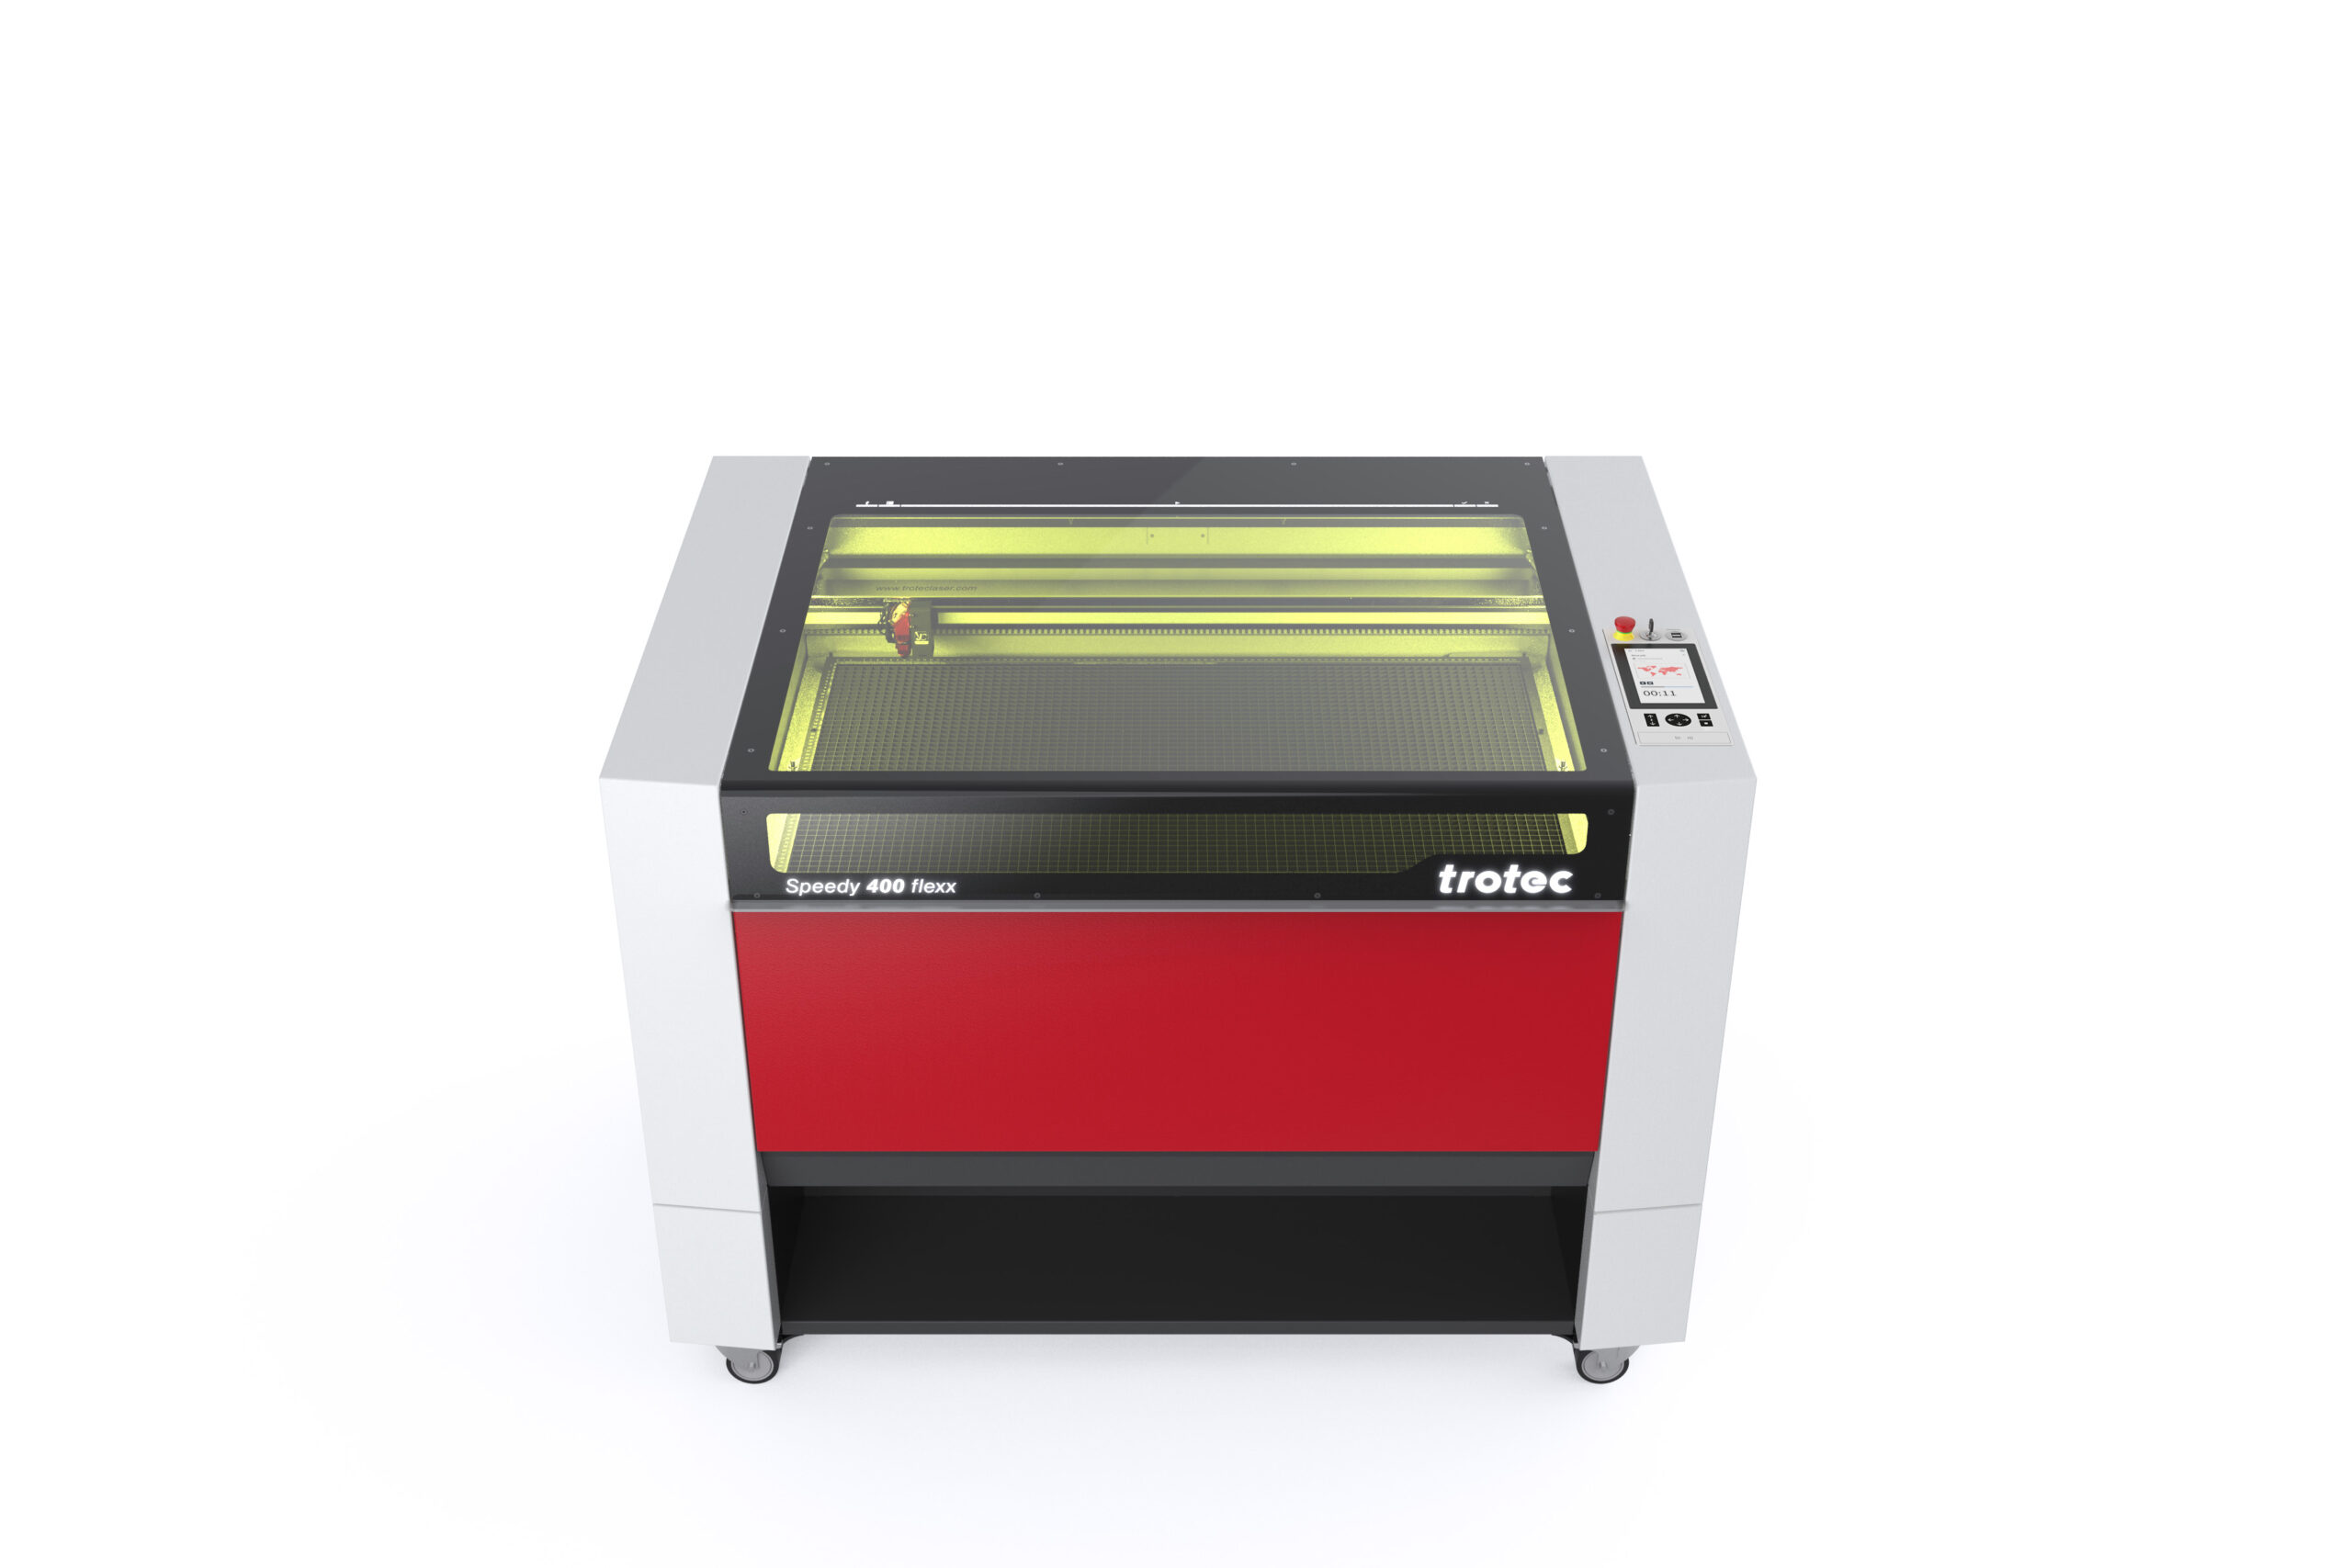 Trotec Speedy 400 flexx Run On Ruby - combined CO2 and fiber laser